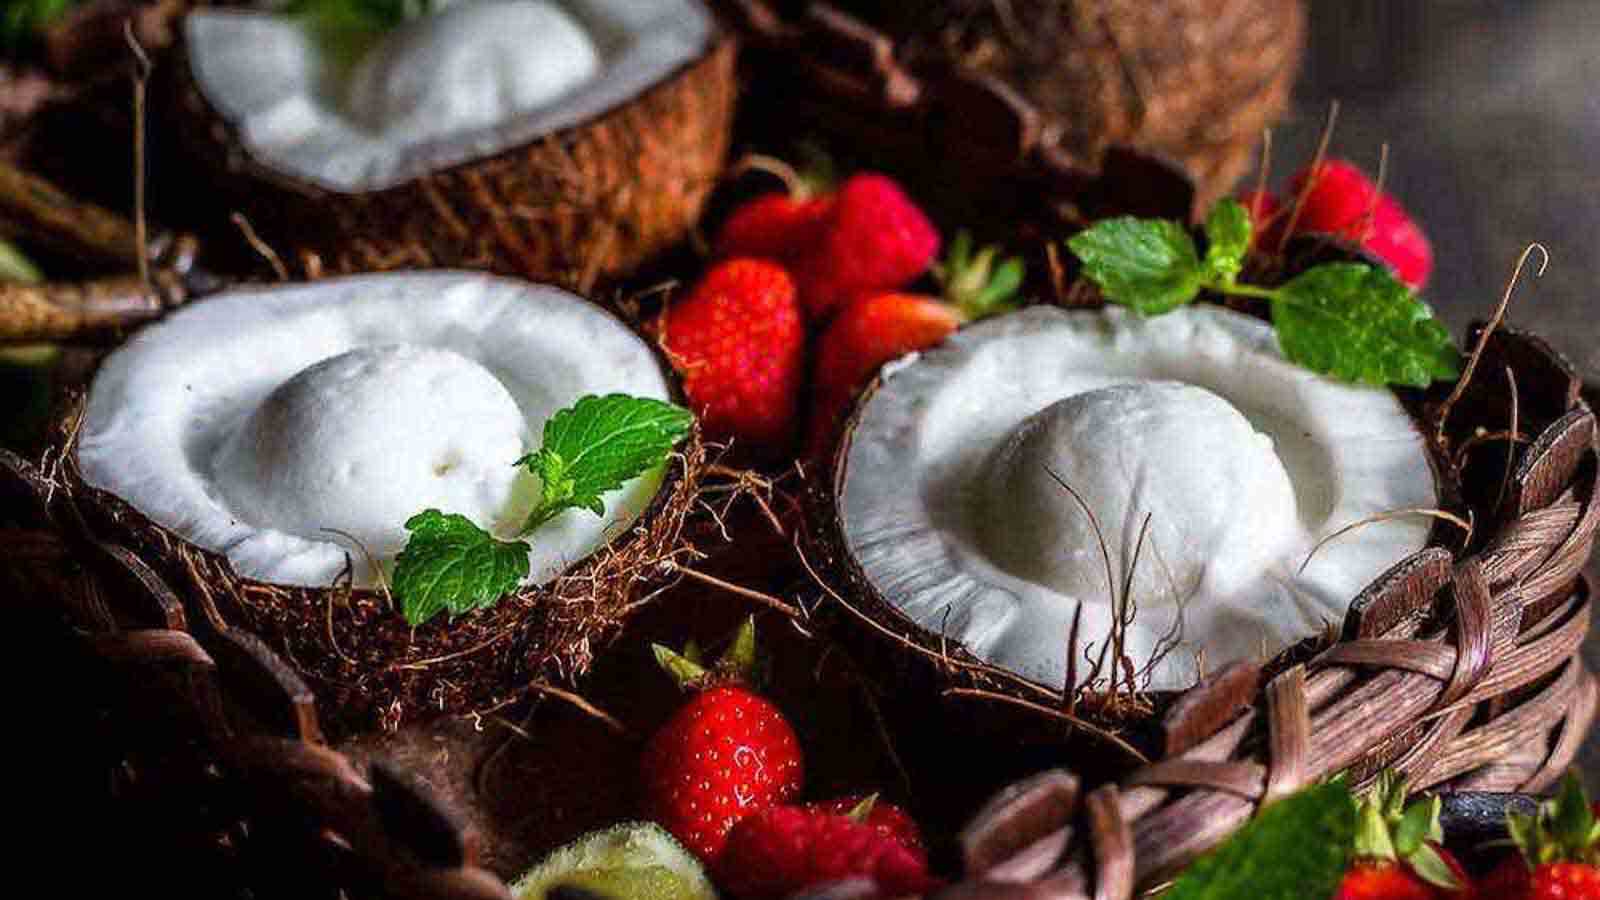 Keto Coconut Ice Cream inside coconut shells with strawberries around.